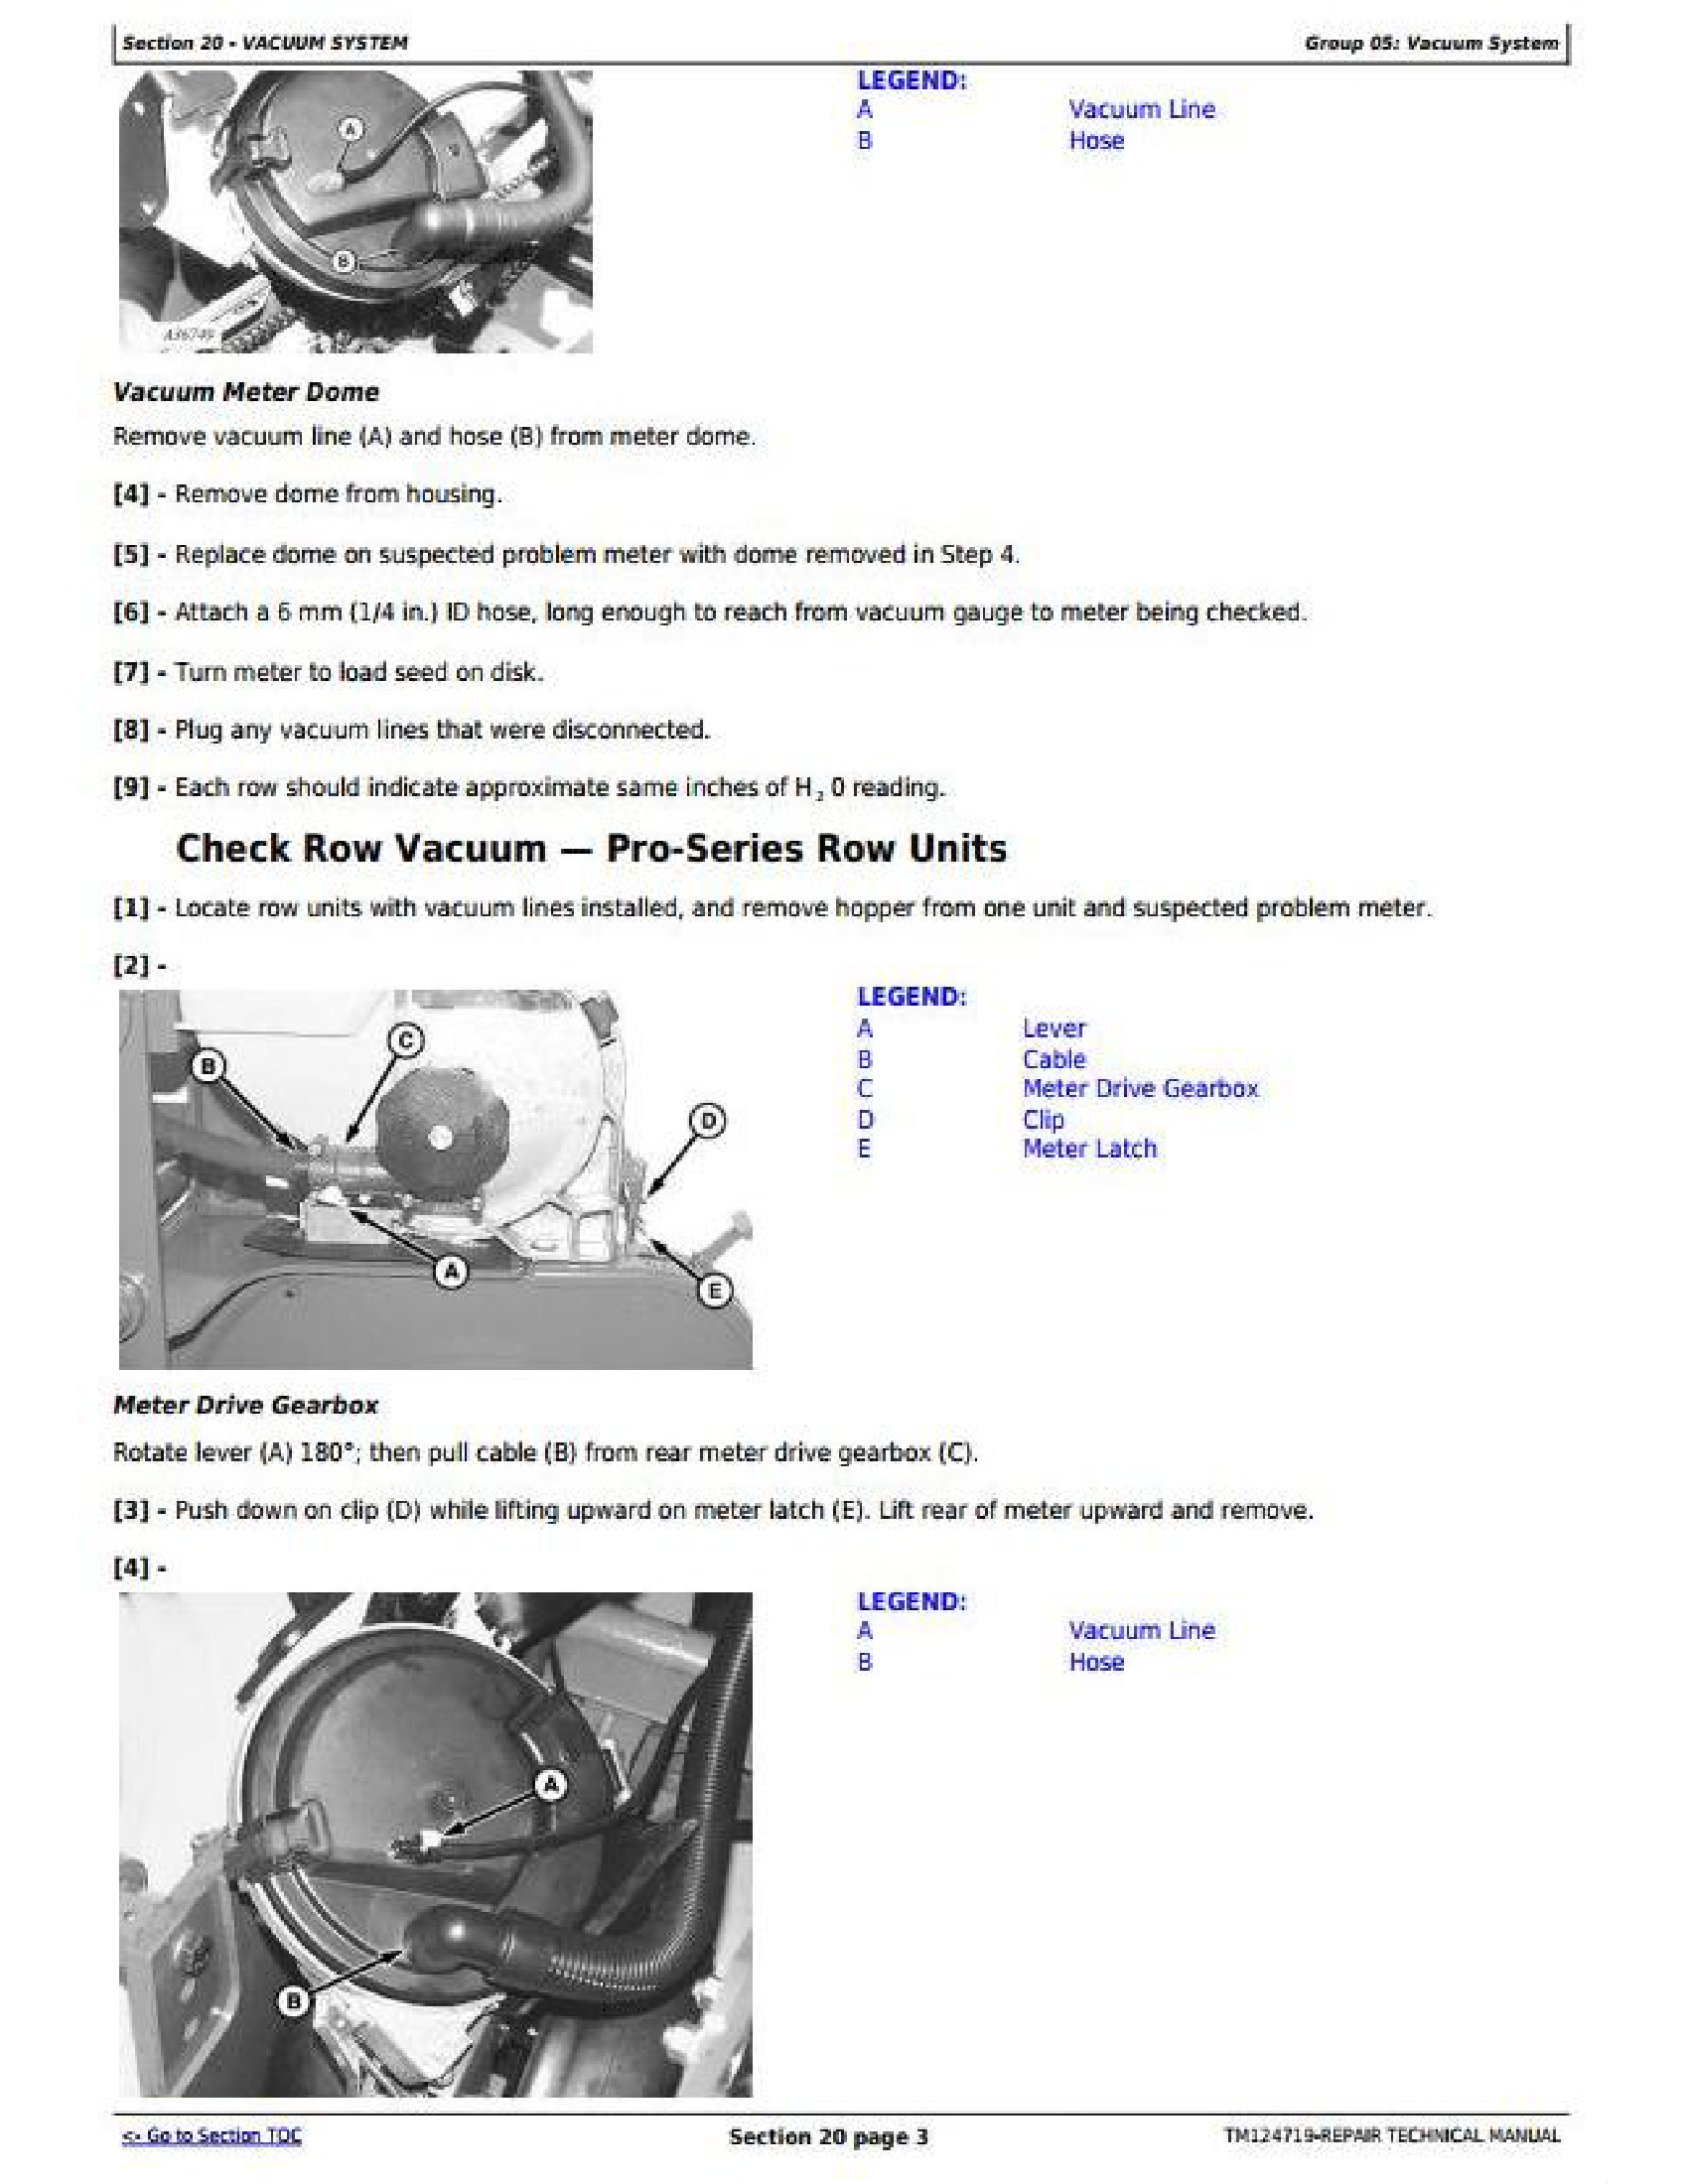 John Deere 590D manual pdf